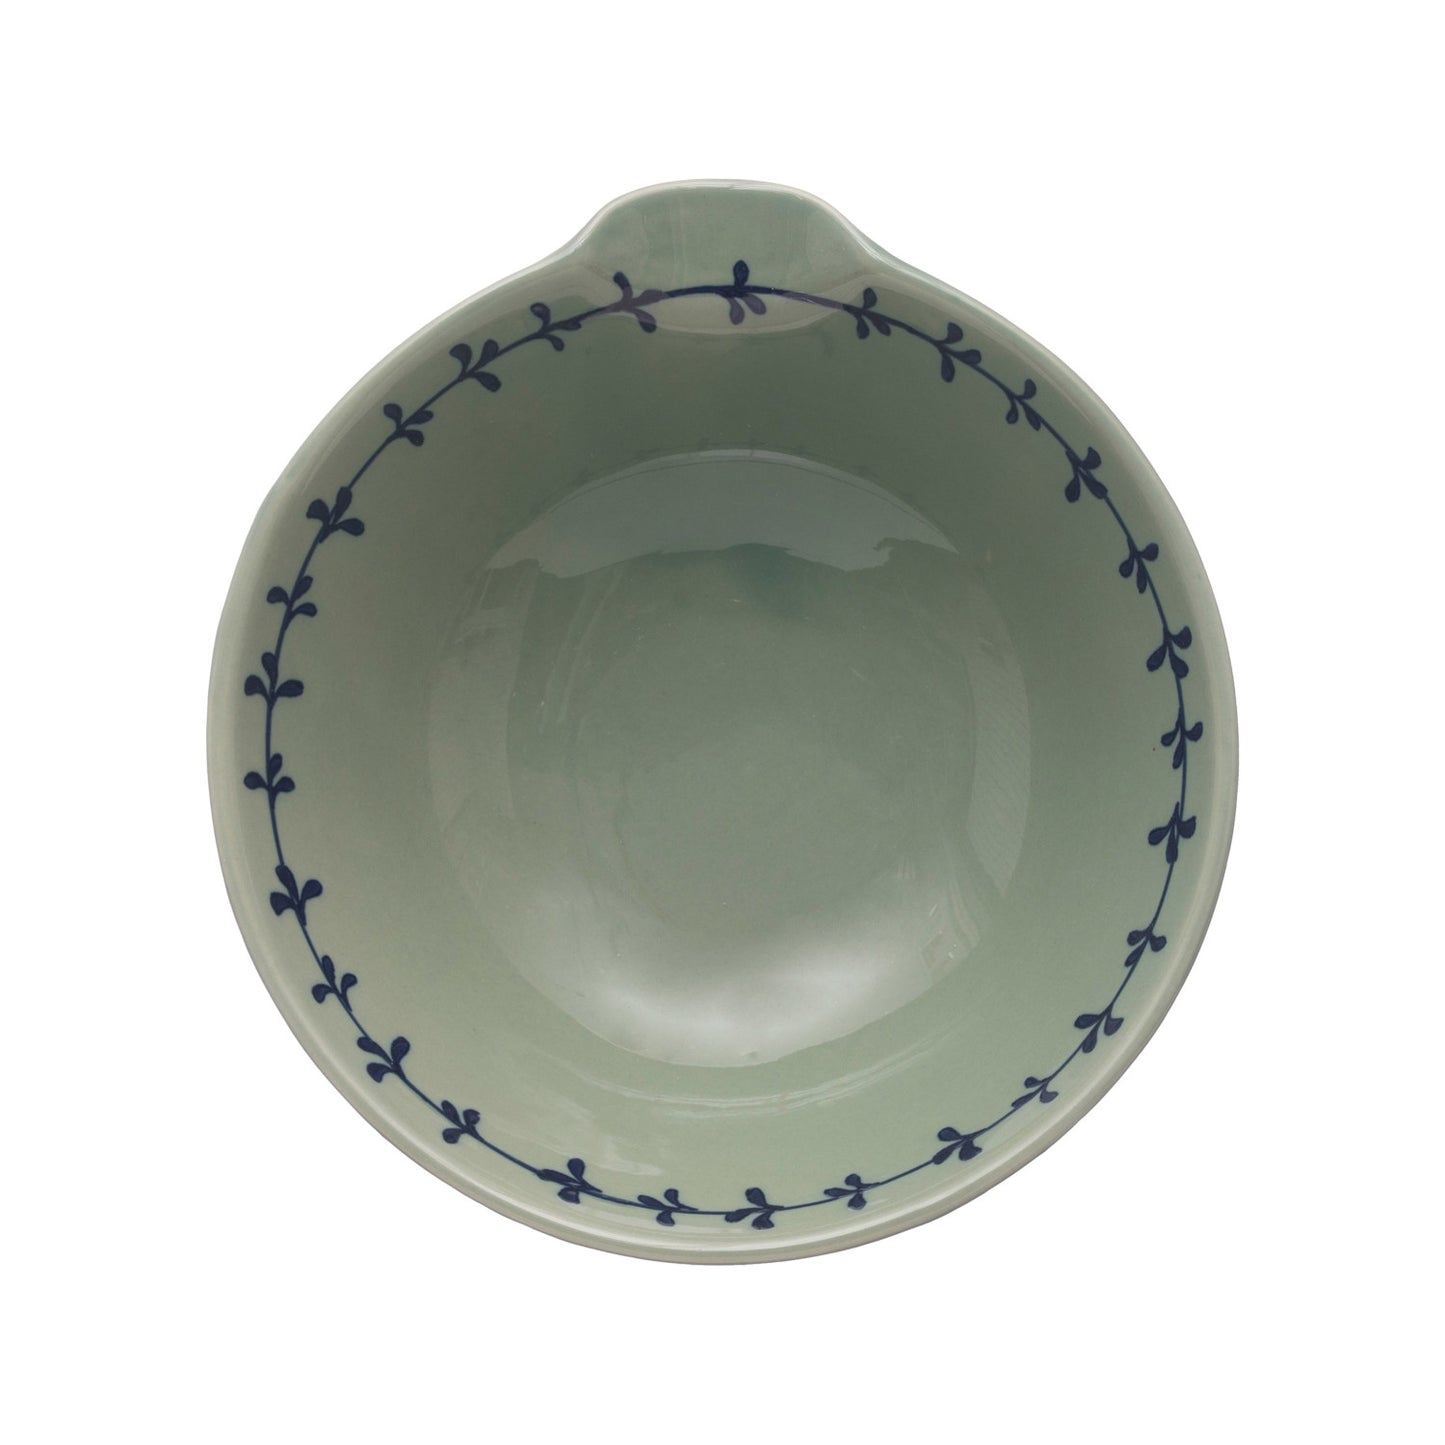 Stoneware Bowl with Spout